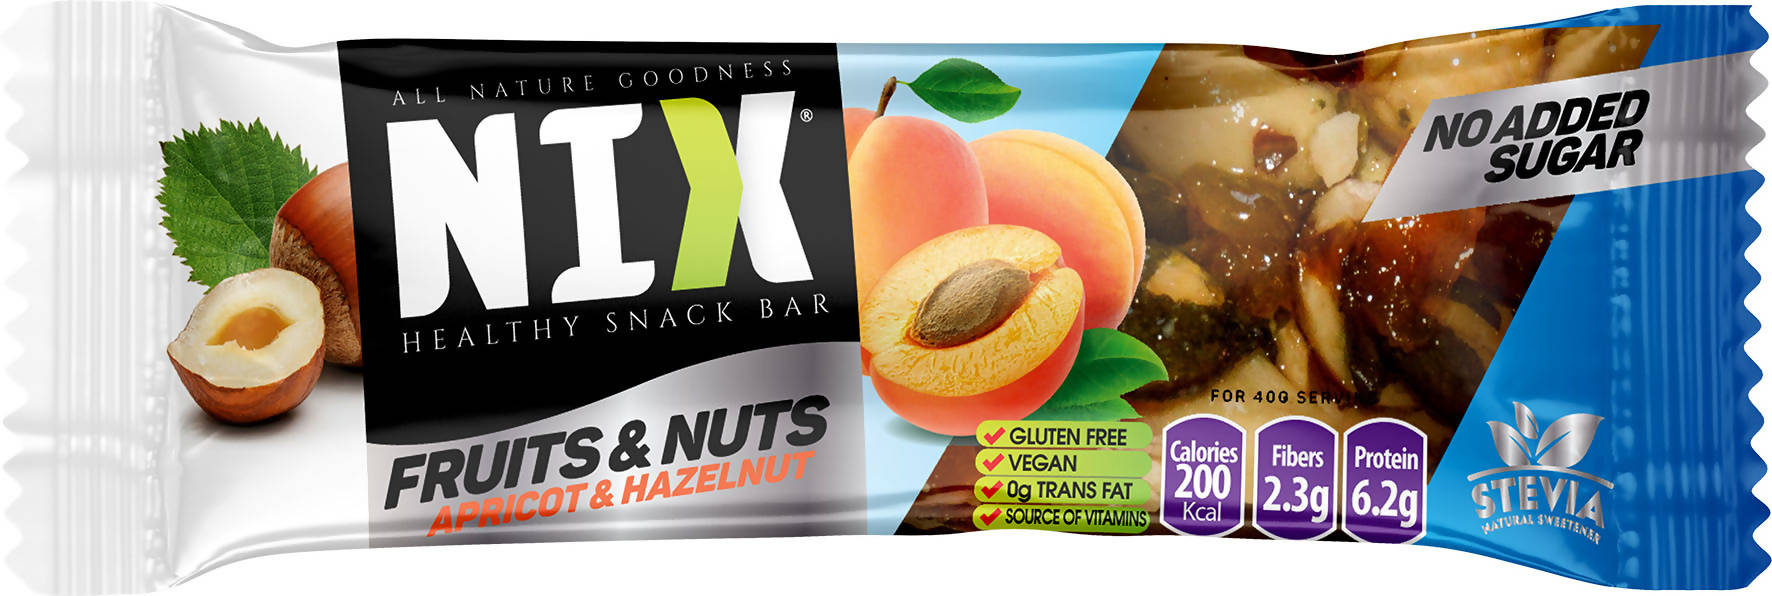 NIX F&N Apricot & Hazelnut Gluten Free vegan Ste-via